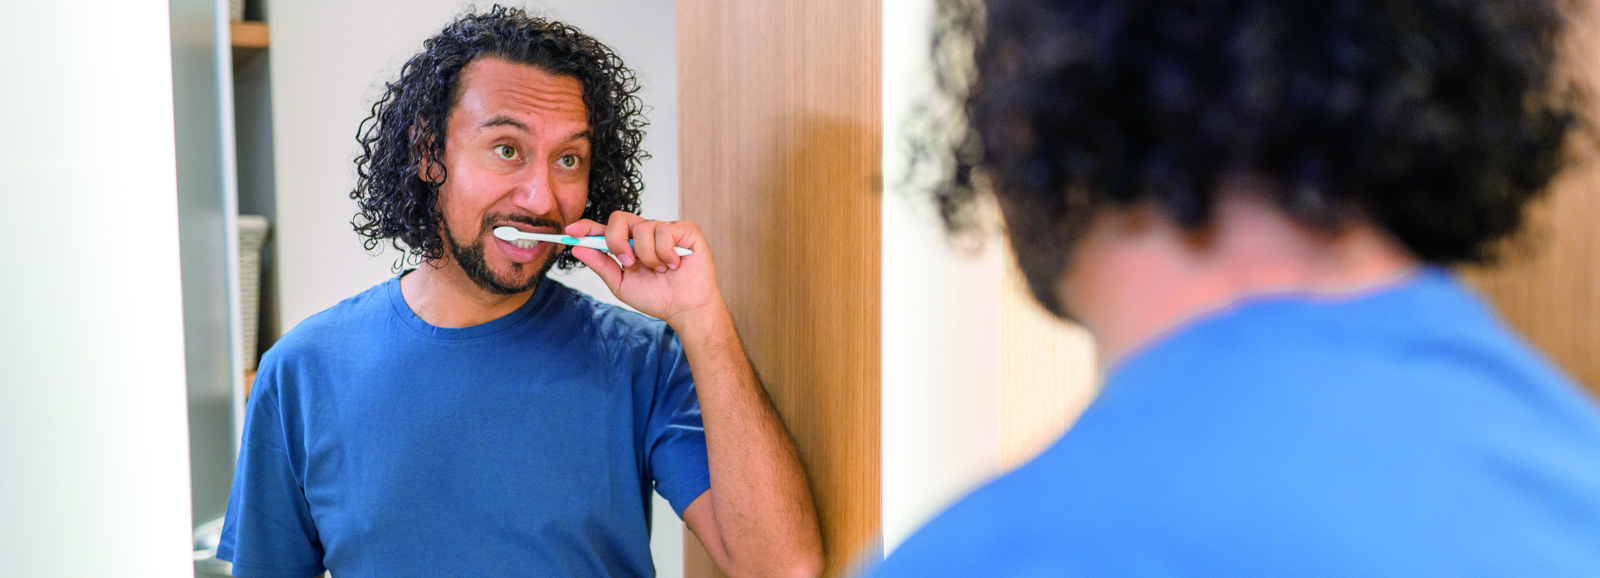 man-brushing-teeth-in-mirror-1600x578.jpg